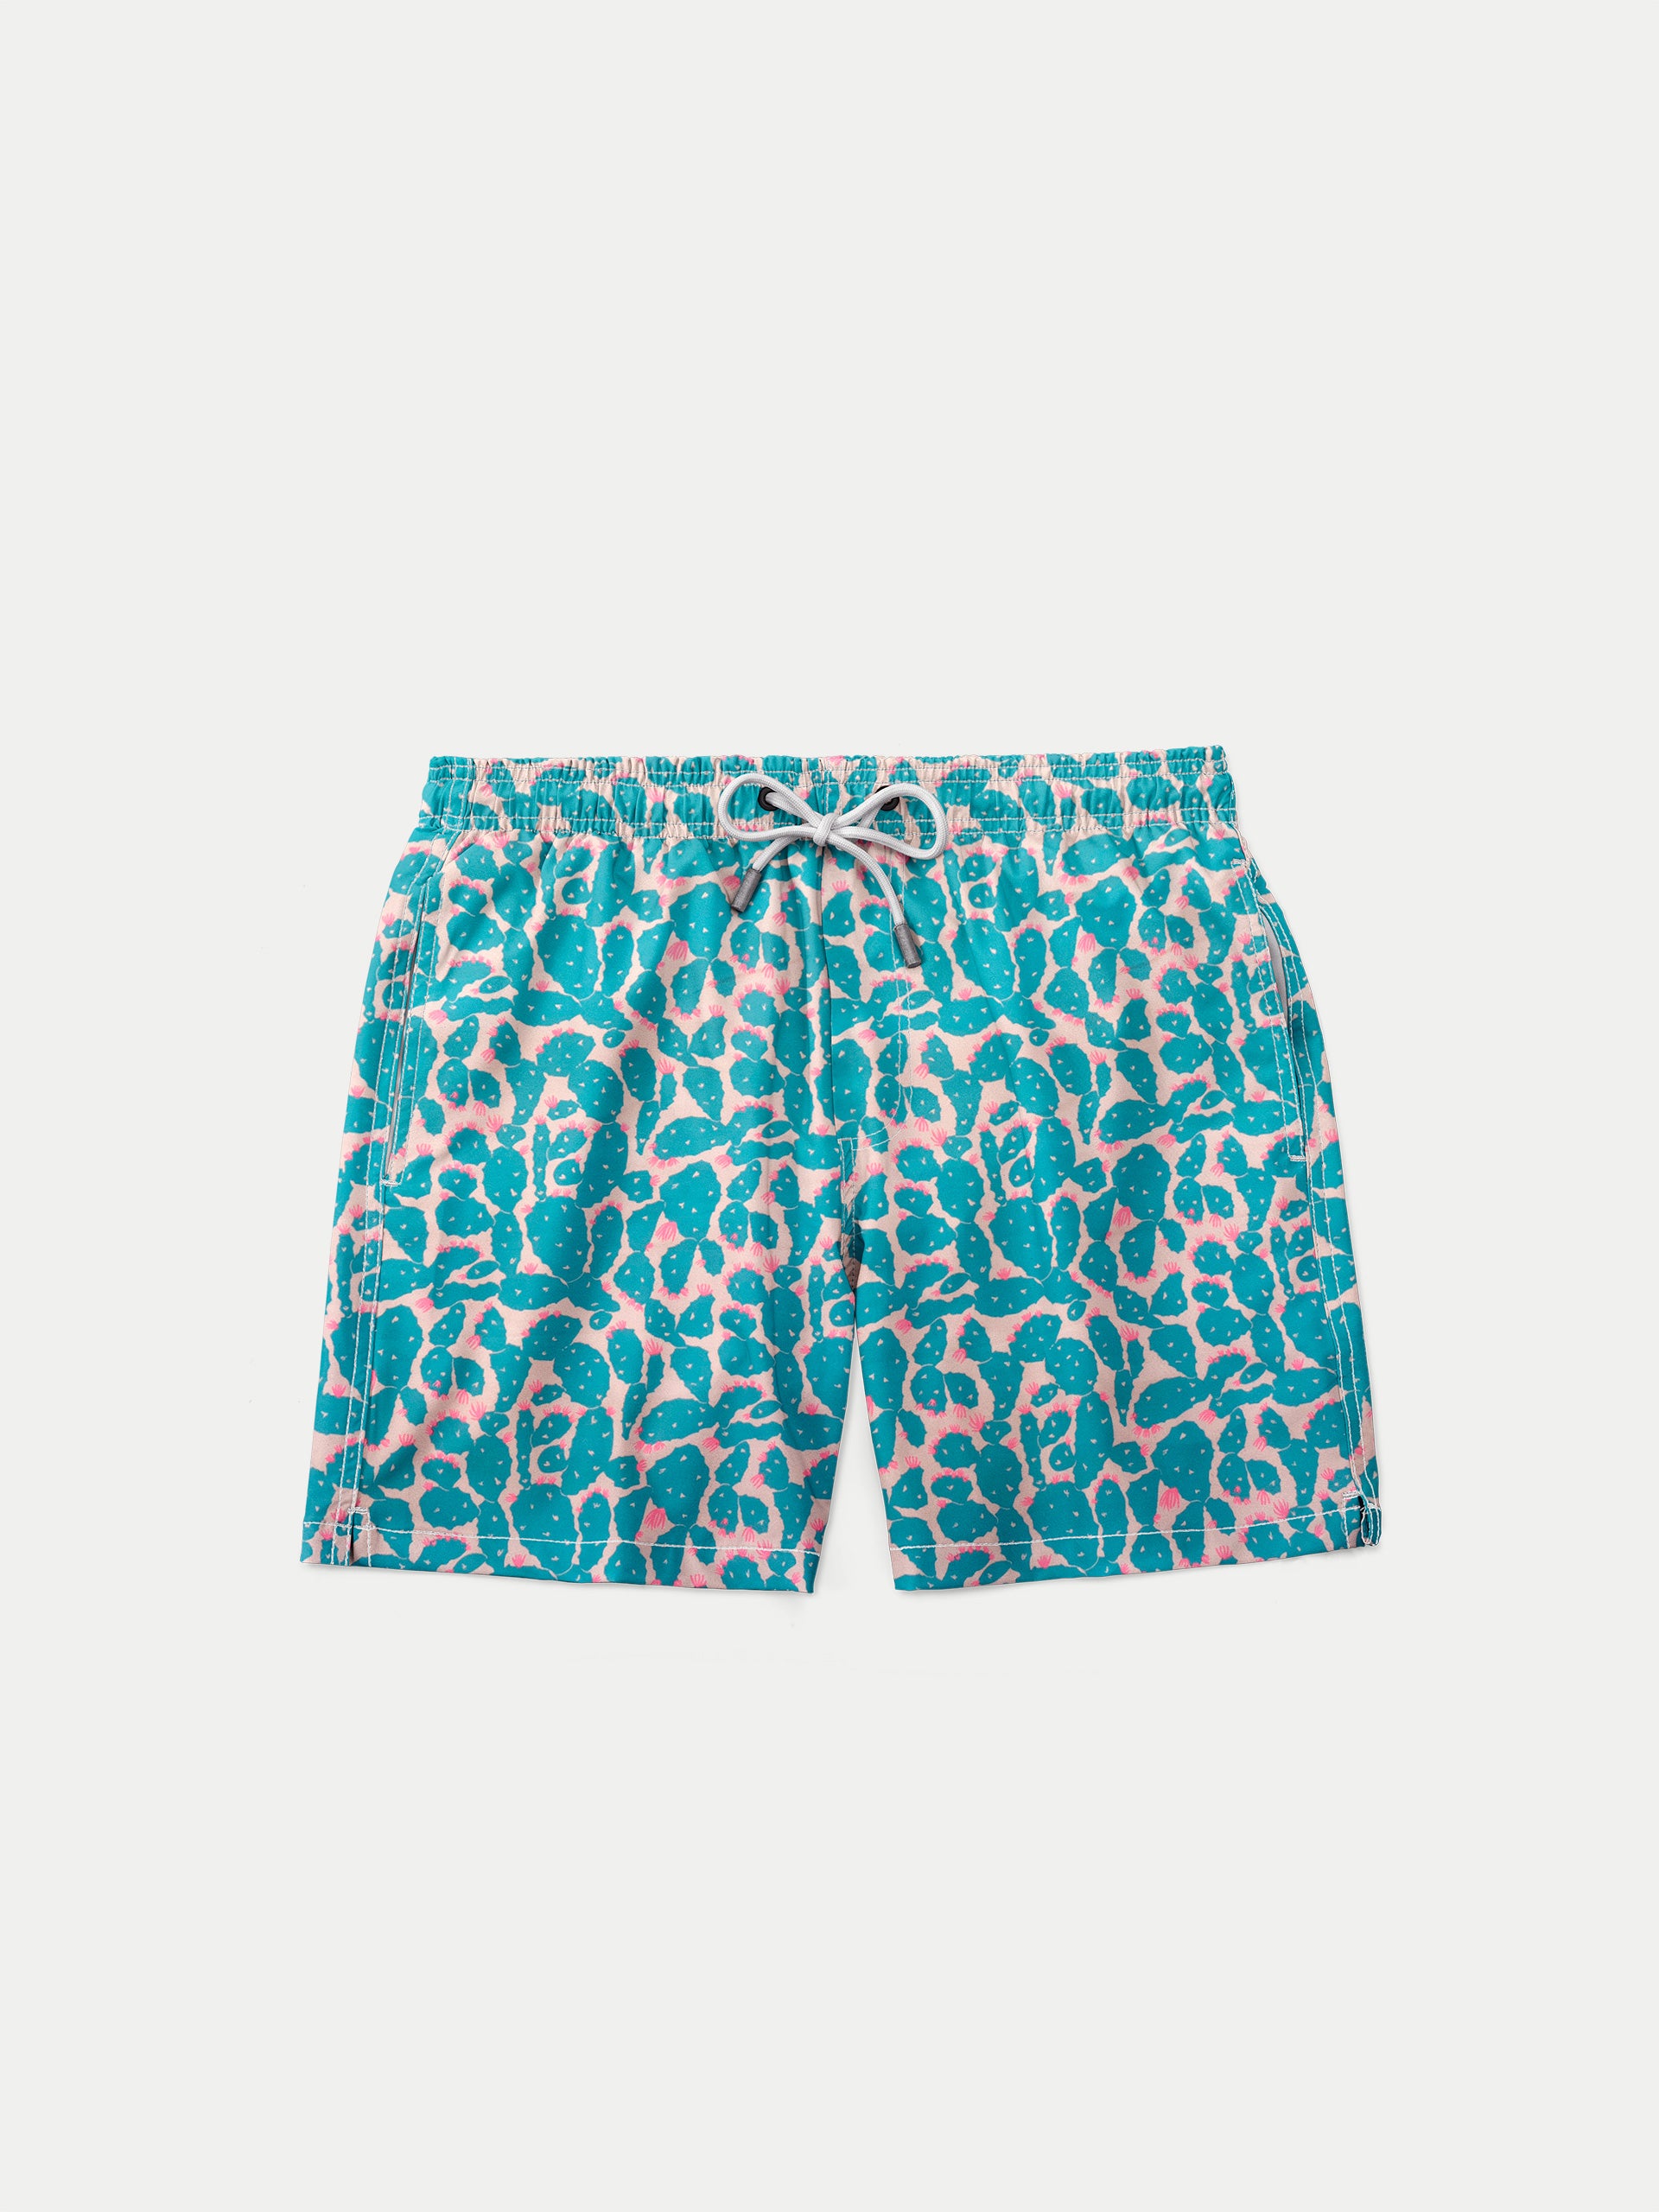 PULLIN - Copacabana Men's Fashion 2 Boxer Shorts, Multicoloured, XS :  : Fashion